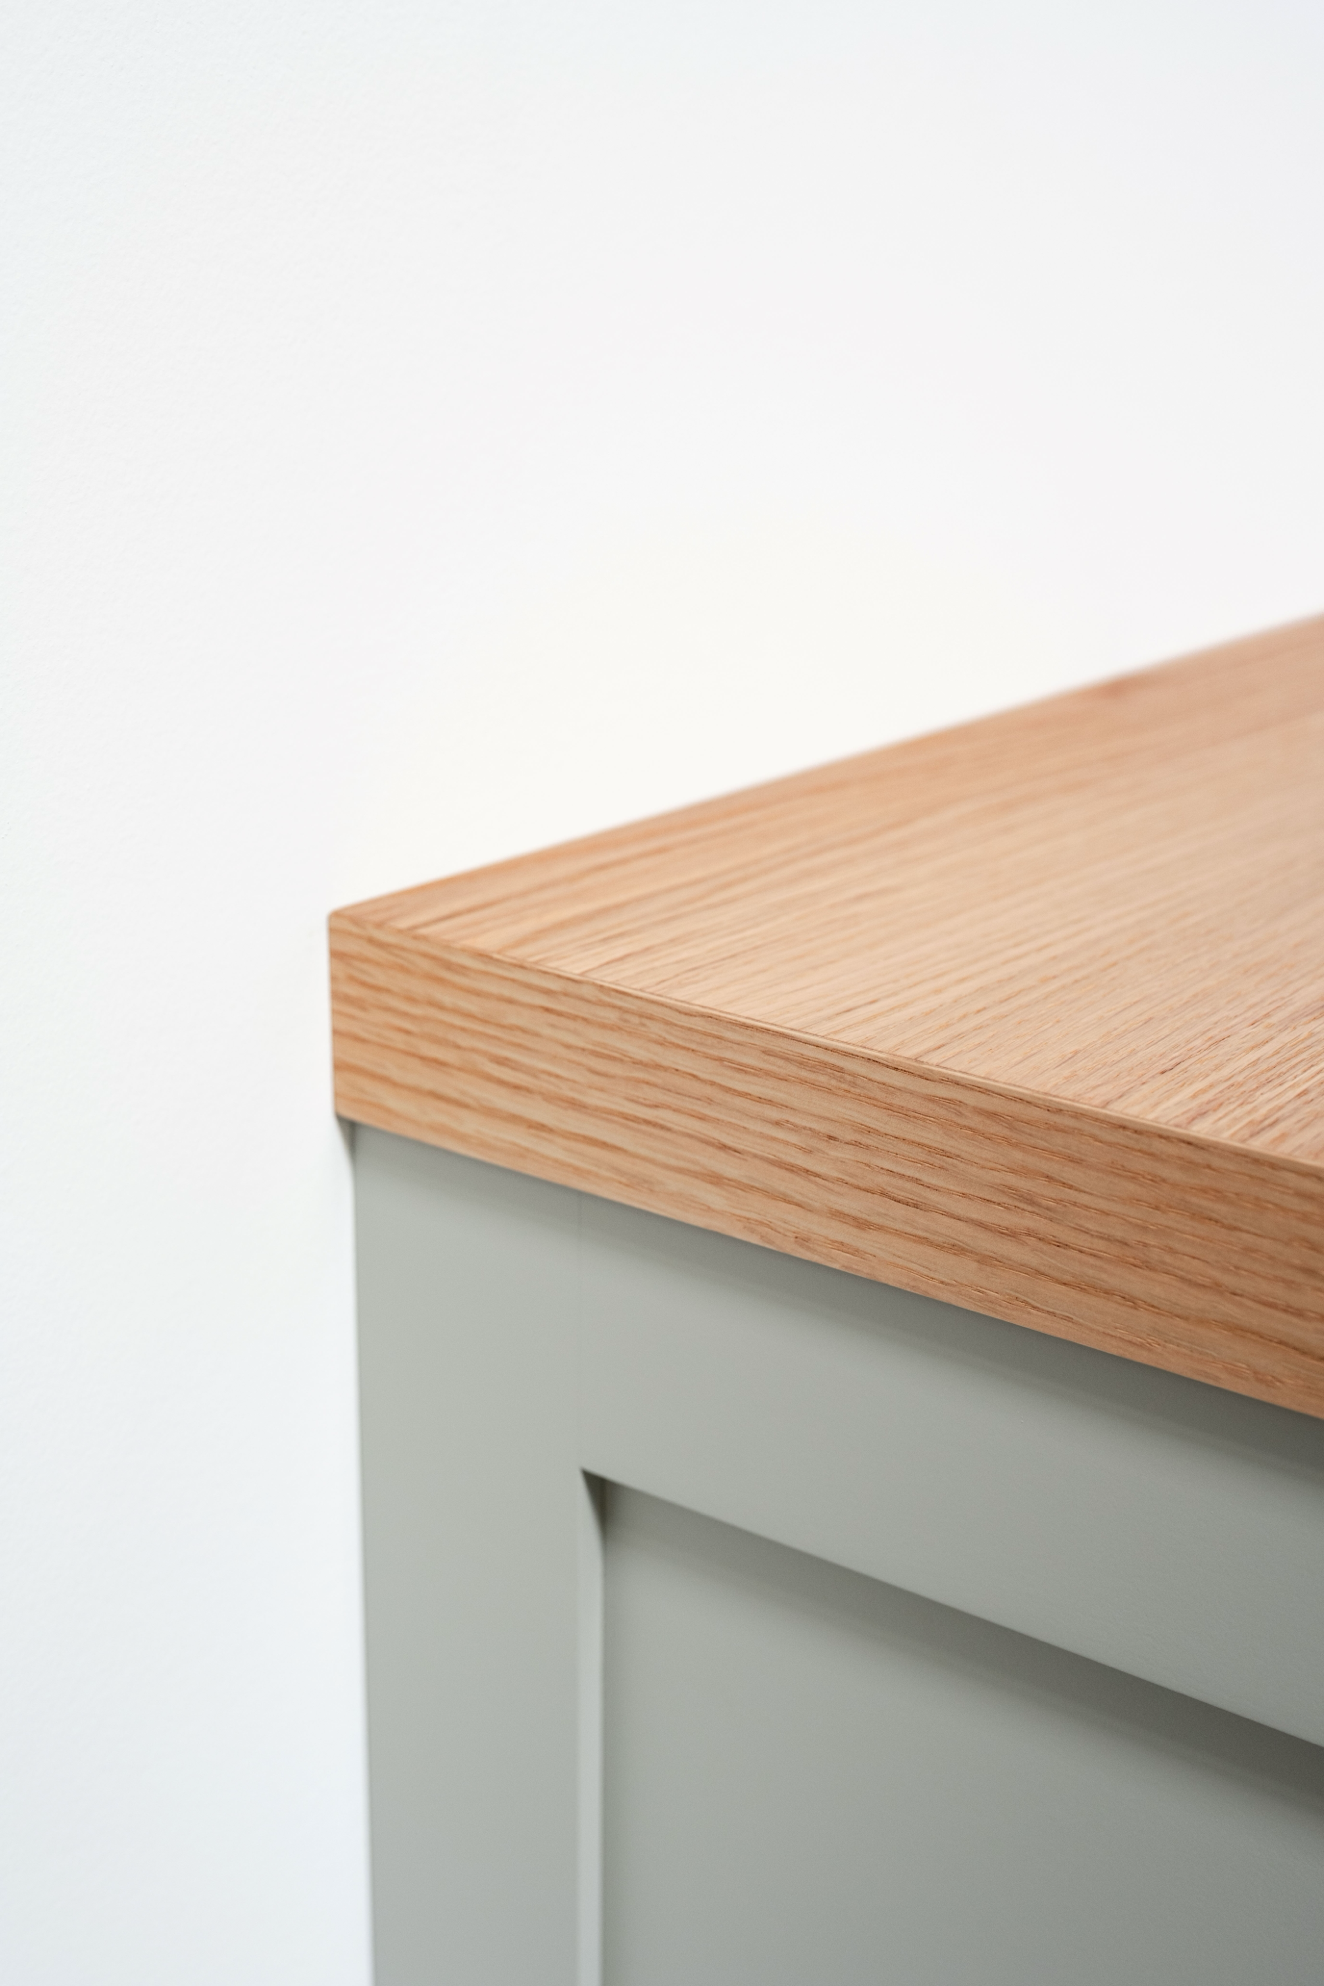 Red Oak 1.75" thick Cabinet Top / Slab Shelf